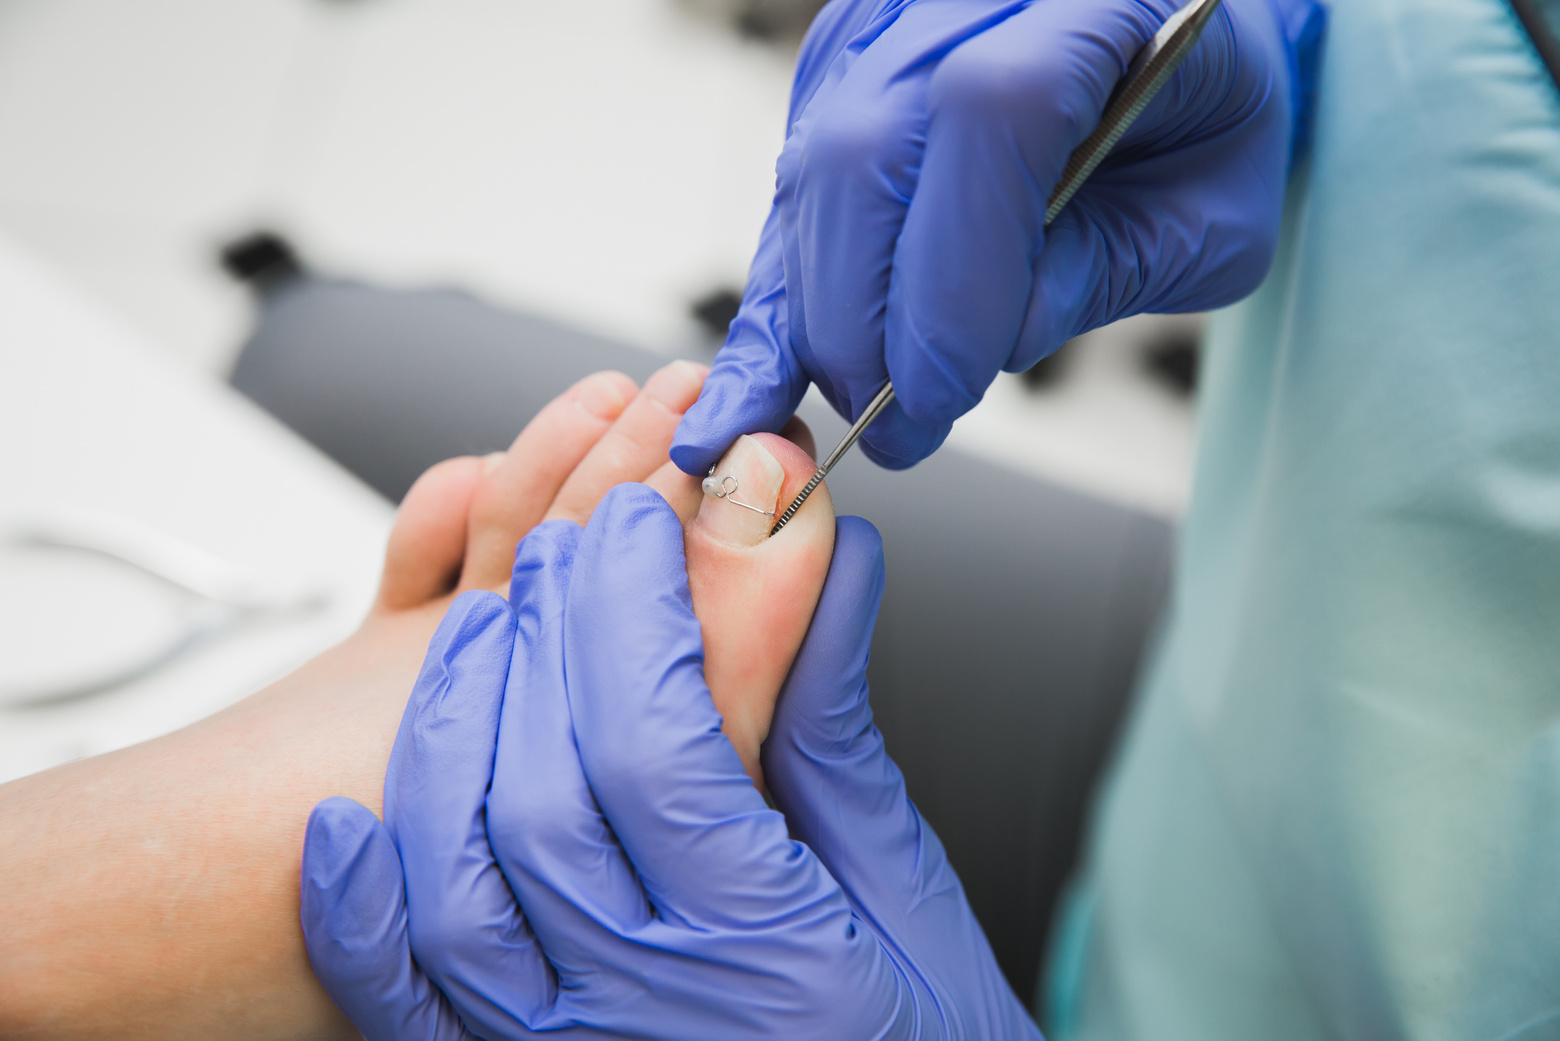 Nail clip. A podiatrist treats an ingrown toenail. Medical pedicure procedure. Orthonyx Bracket